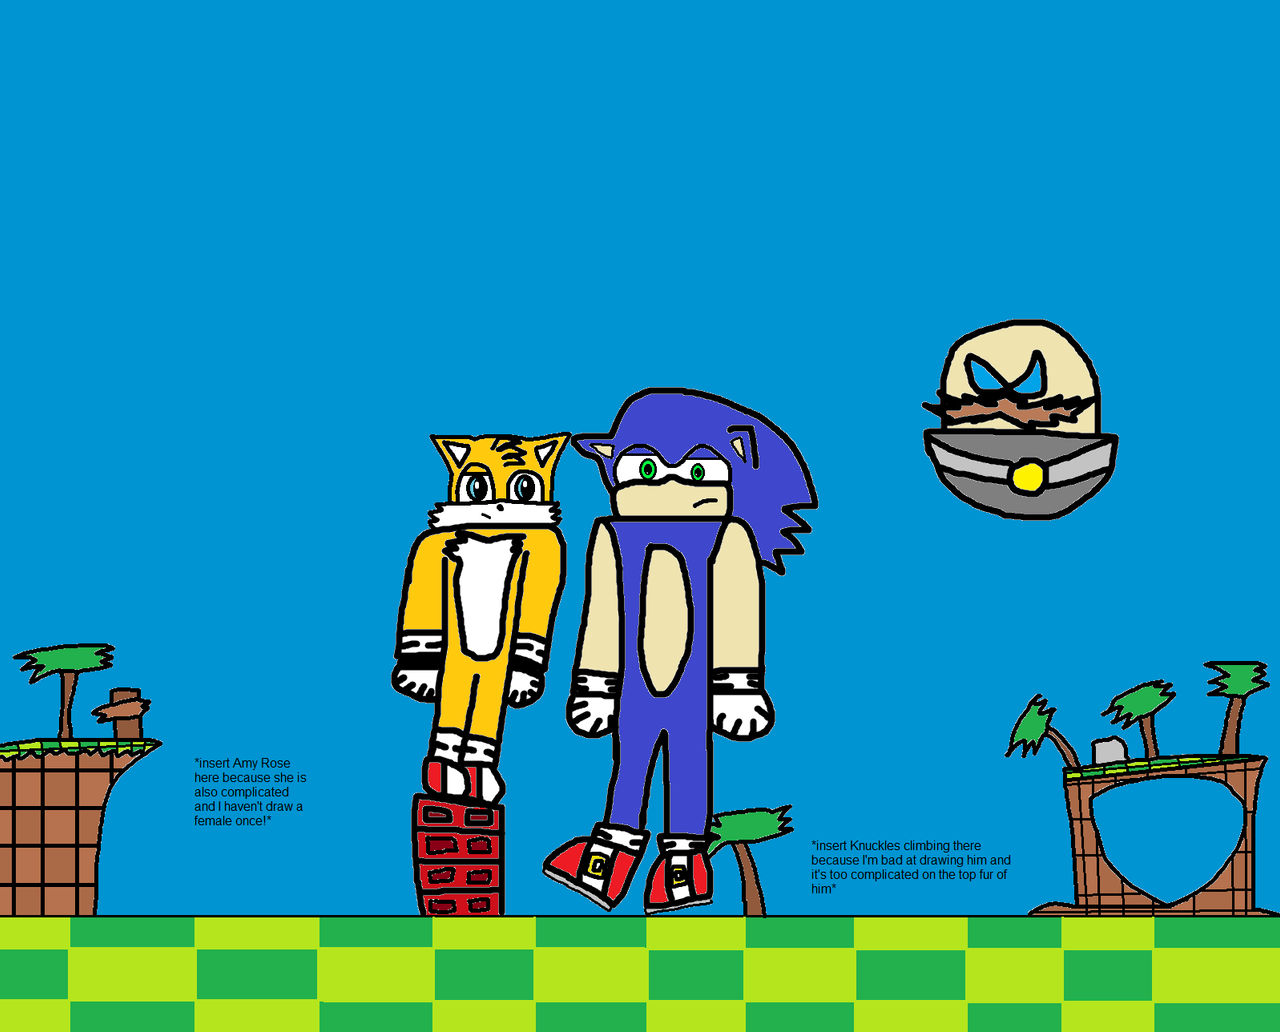 FNF V.S. Sonic mod - Green Hill Zone by HeartinaRosebud on DeviantArt